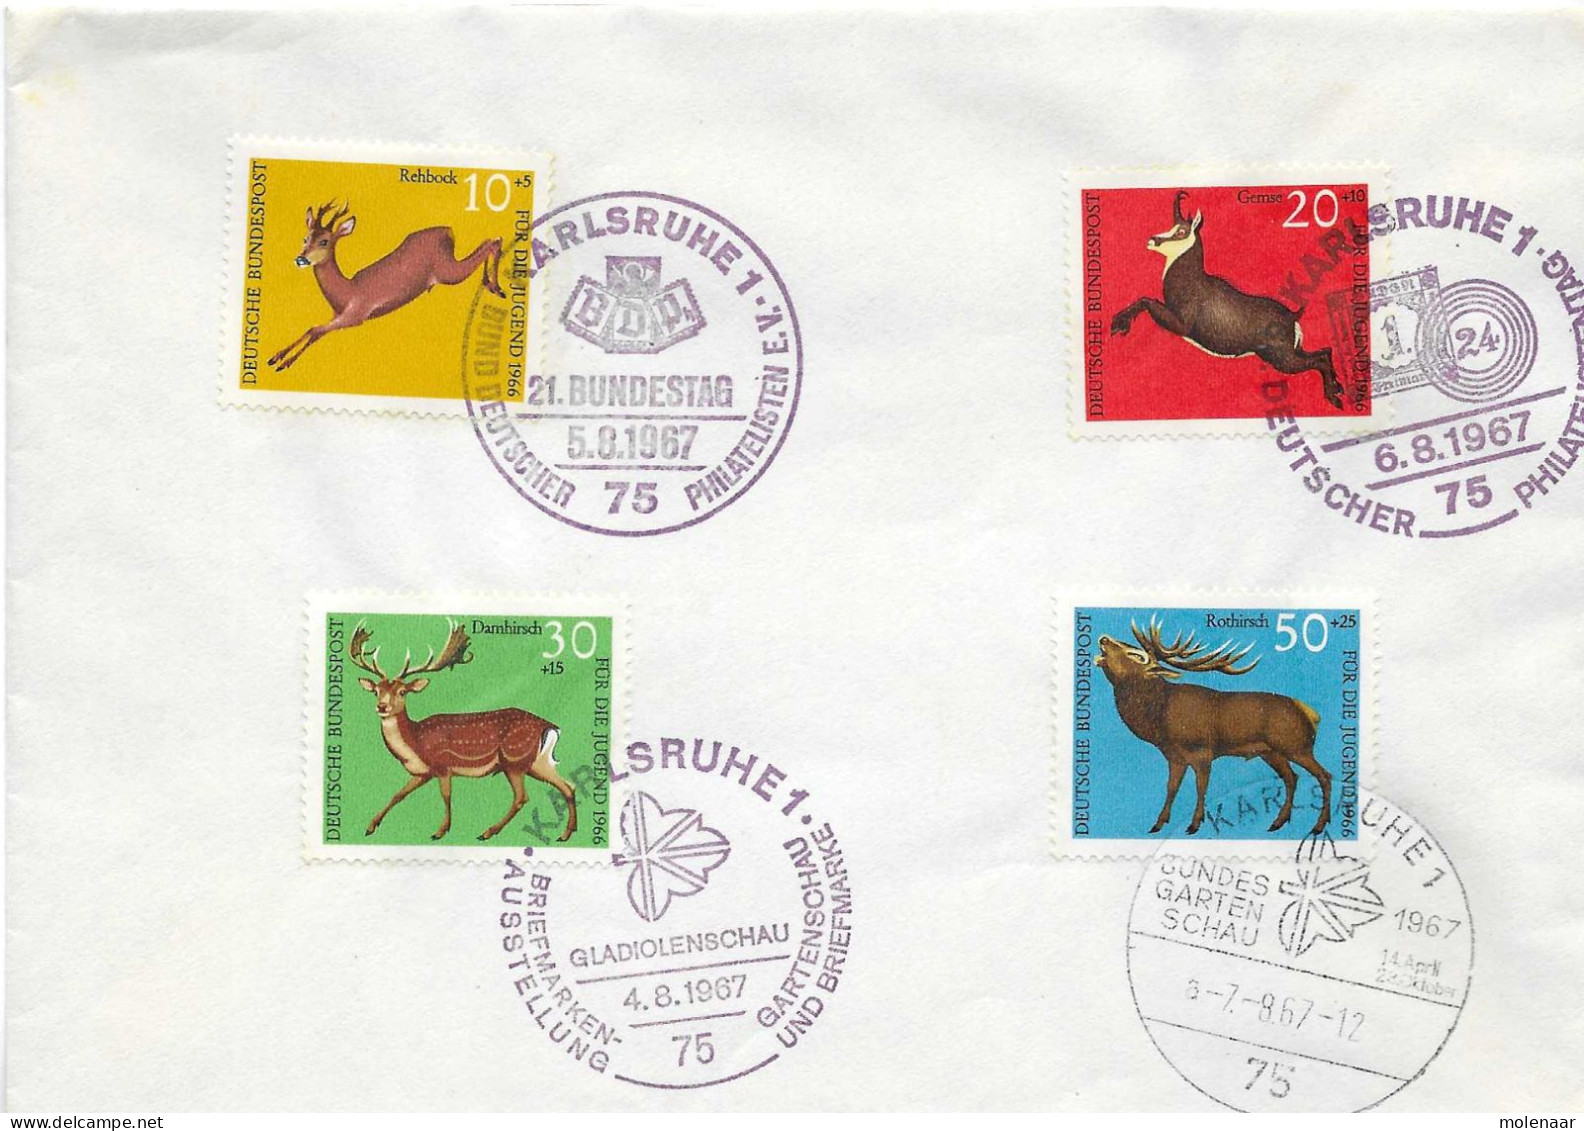 Postzegels > Europa > Duitsland > West-Duitsland > 1960-1969 > Brief Met 511-514 4 Verschillende Stempels (17300) - Briefe U. Dokumente